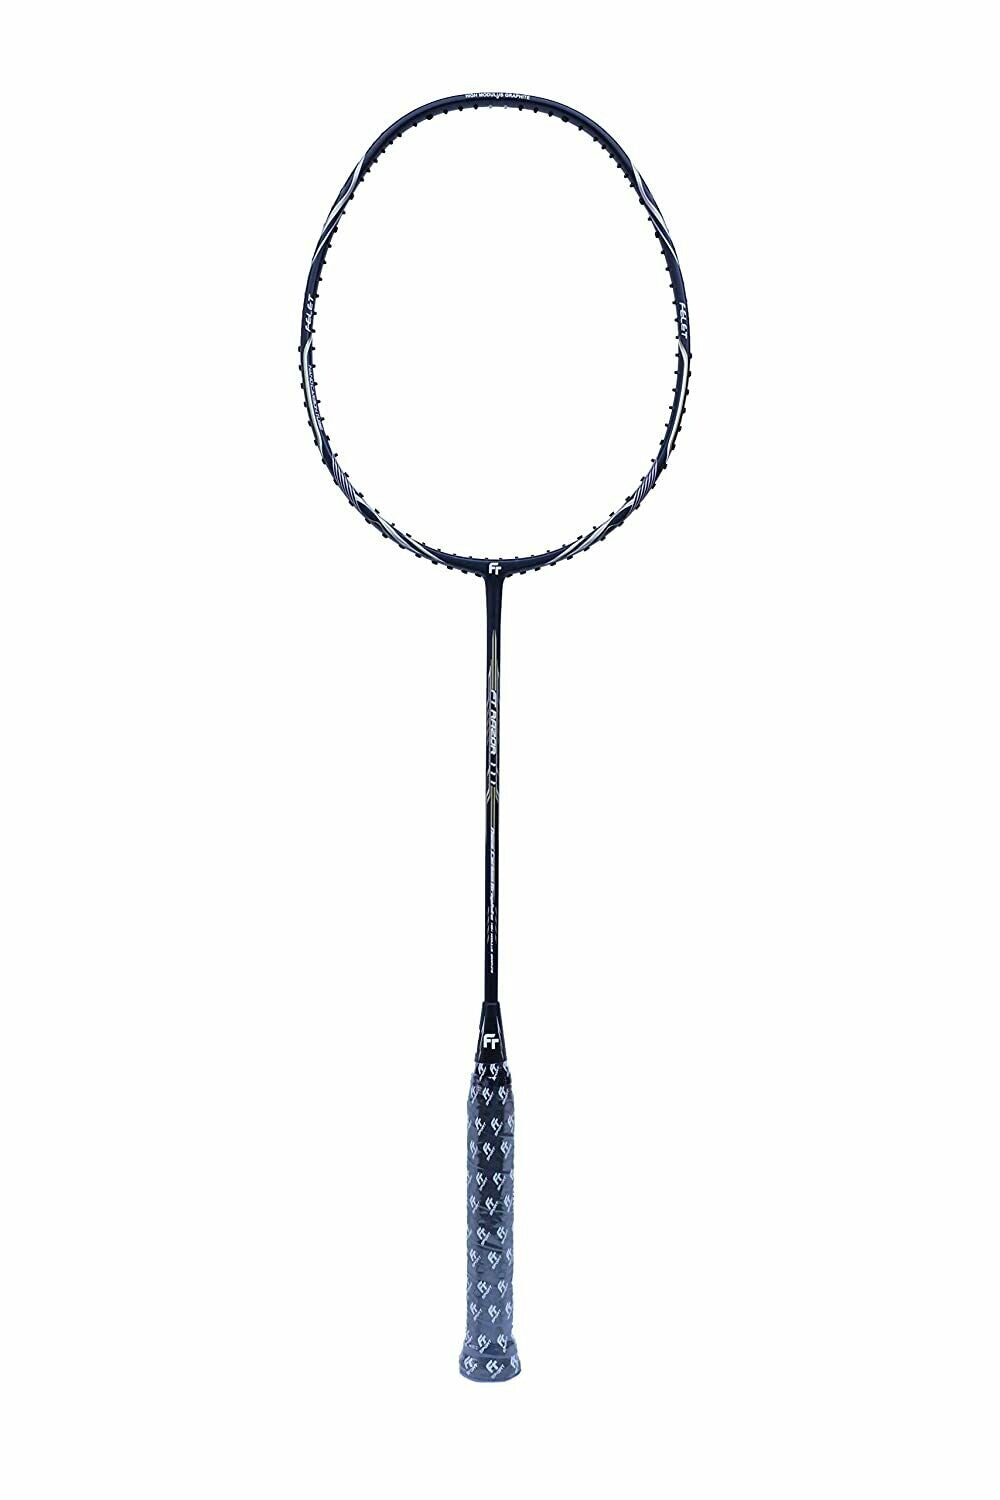 Felet FT Razor 111 Badminton Racket